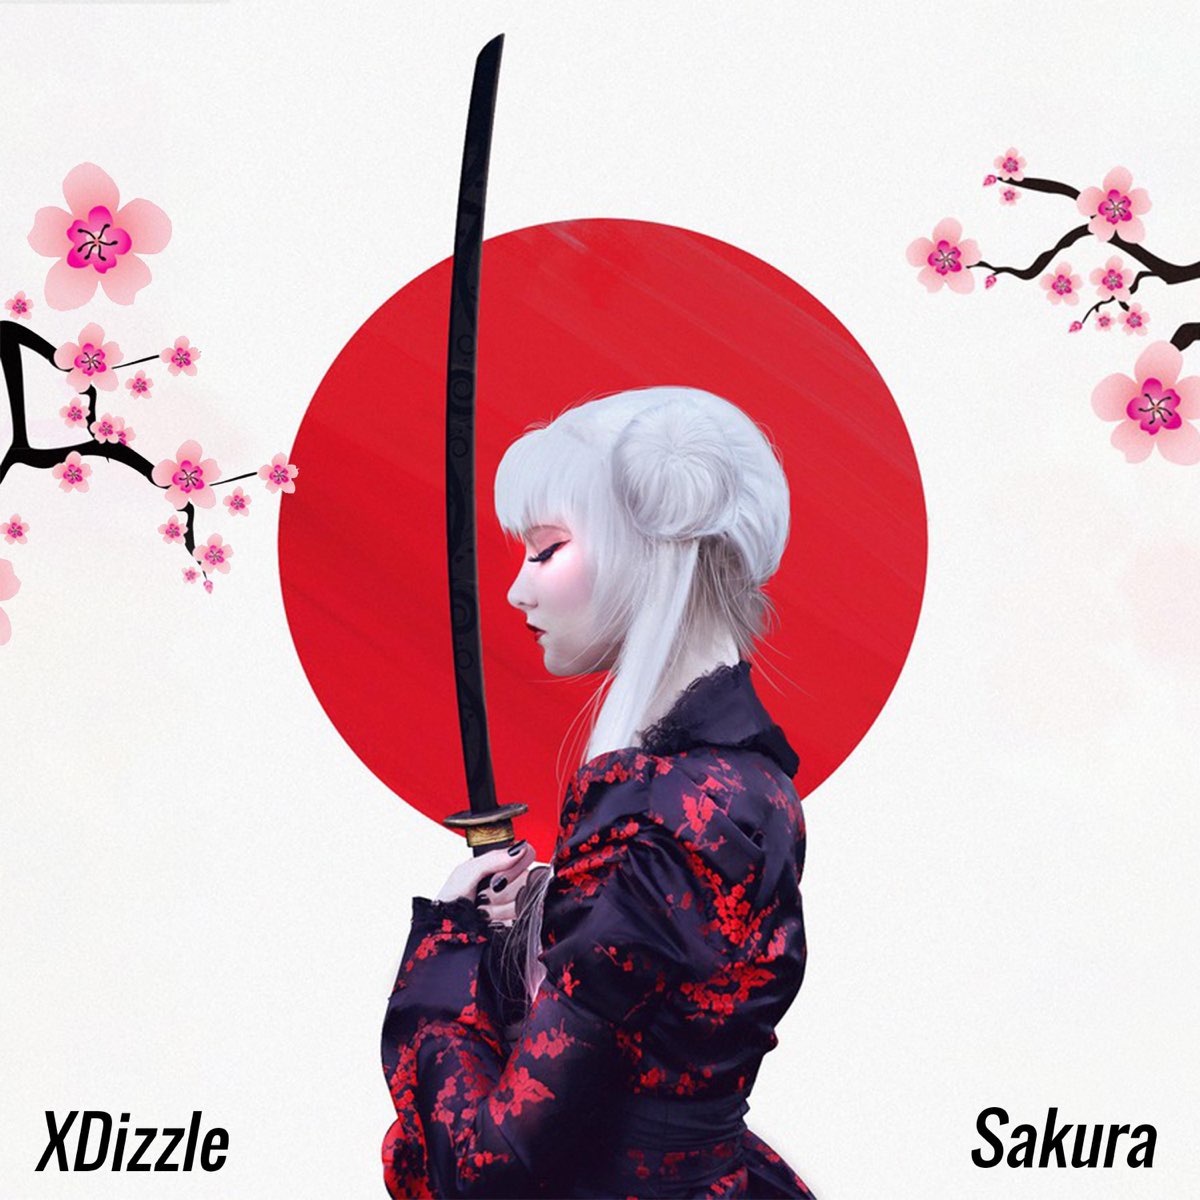 Sakura - Single - Album by Xdizzle - Apple Music